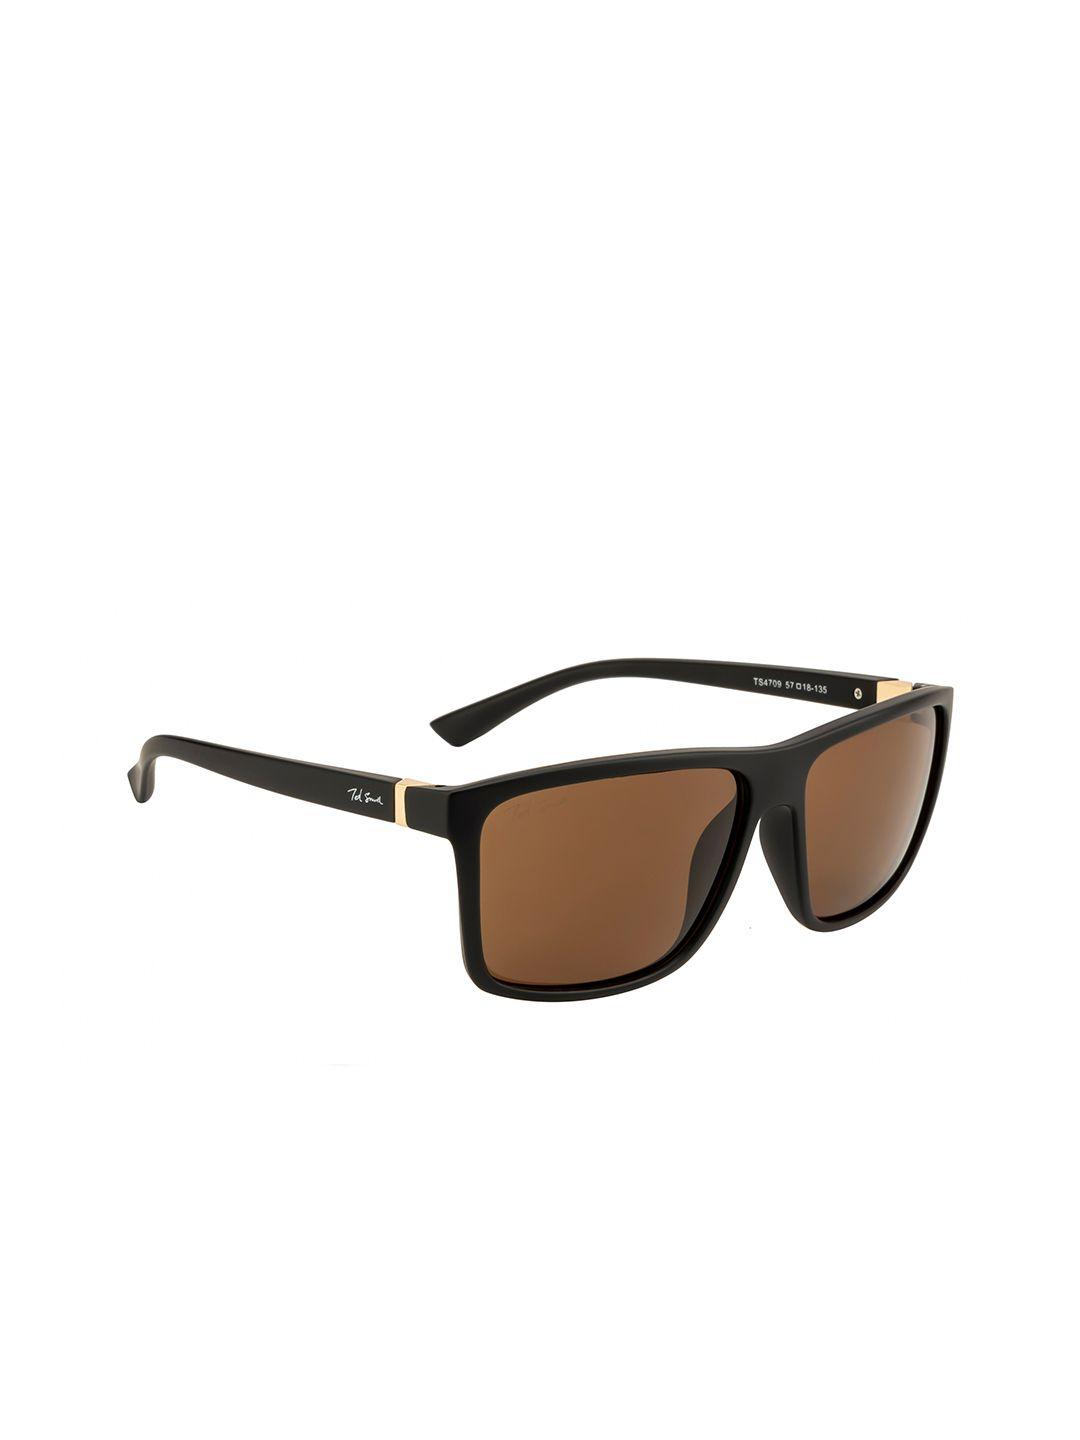 ted smith unisex brown lens & black wayfarer sunglasses with uv protected lens blazed_c2